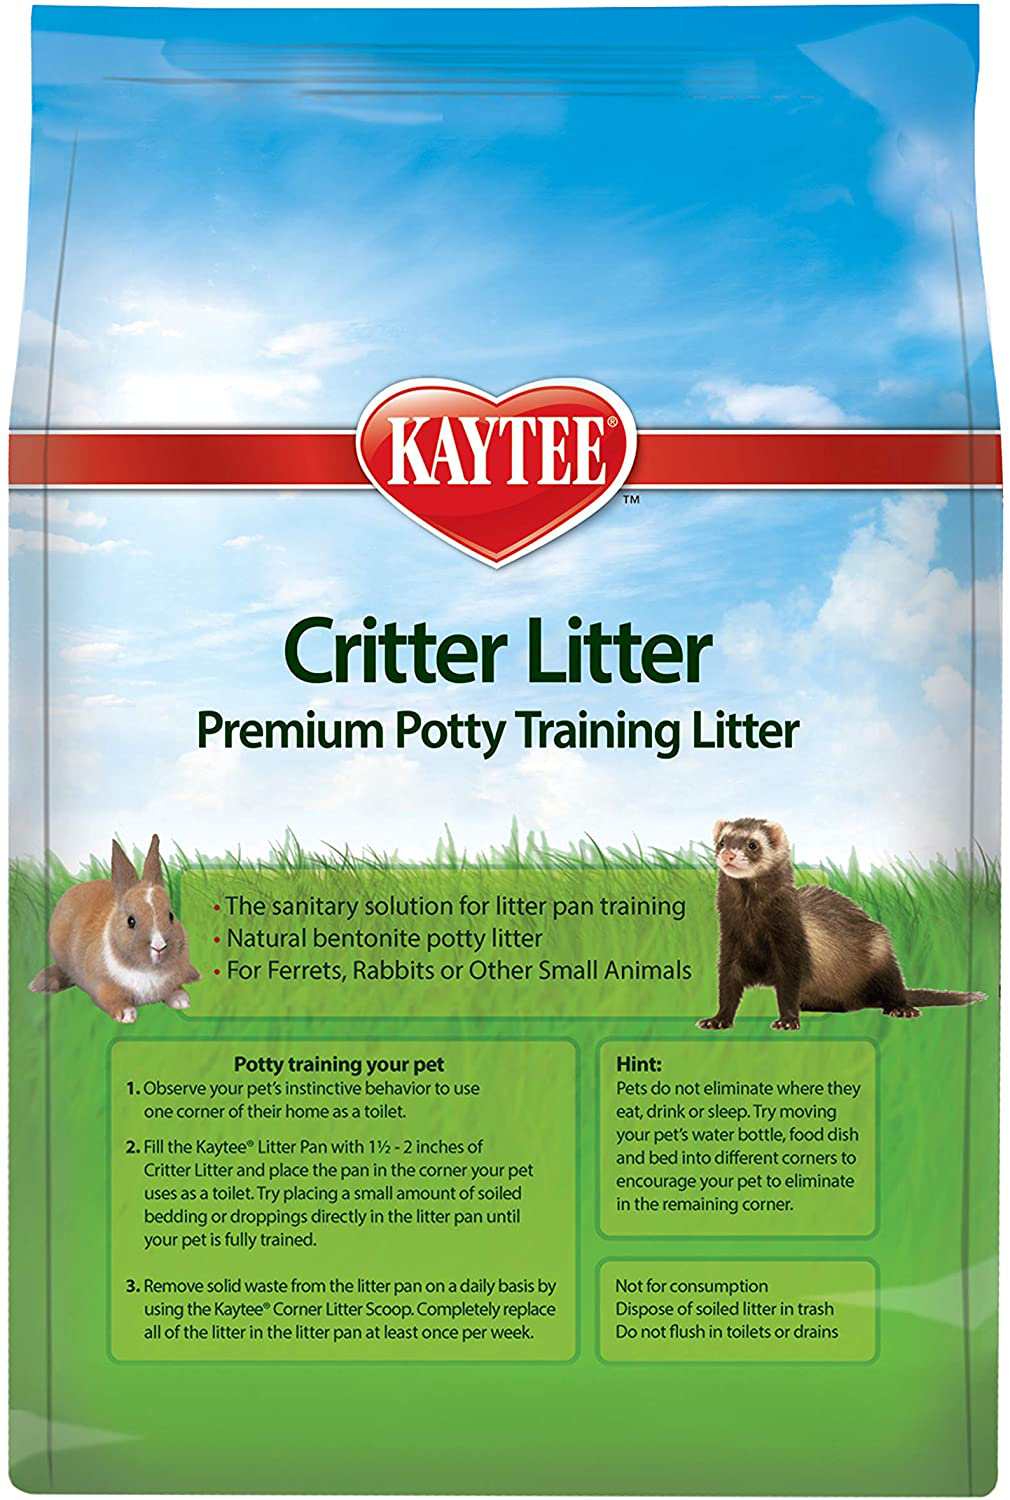 Kaytee Critter Litter Small Animal Premium Potty Training Litter